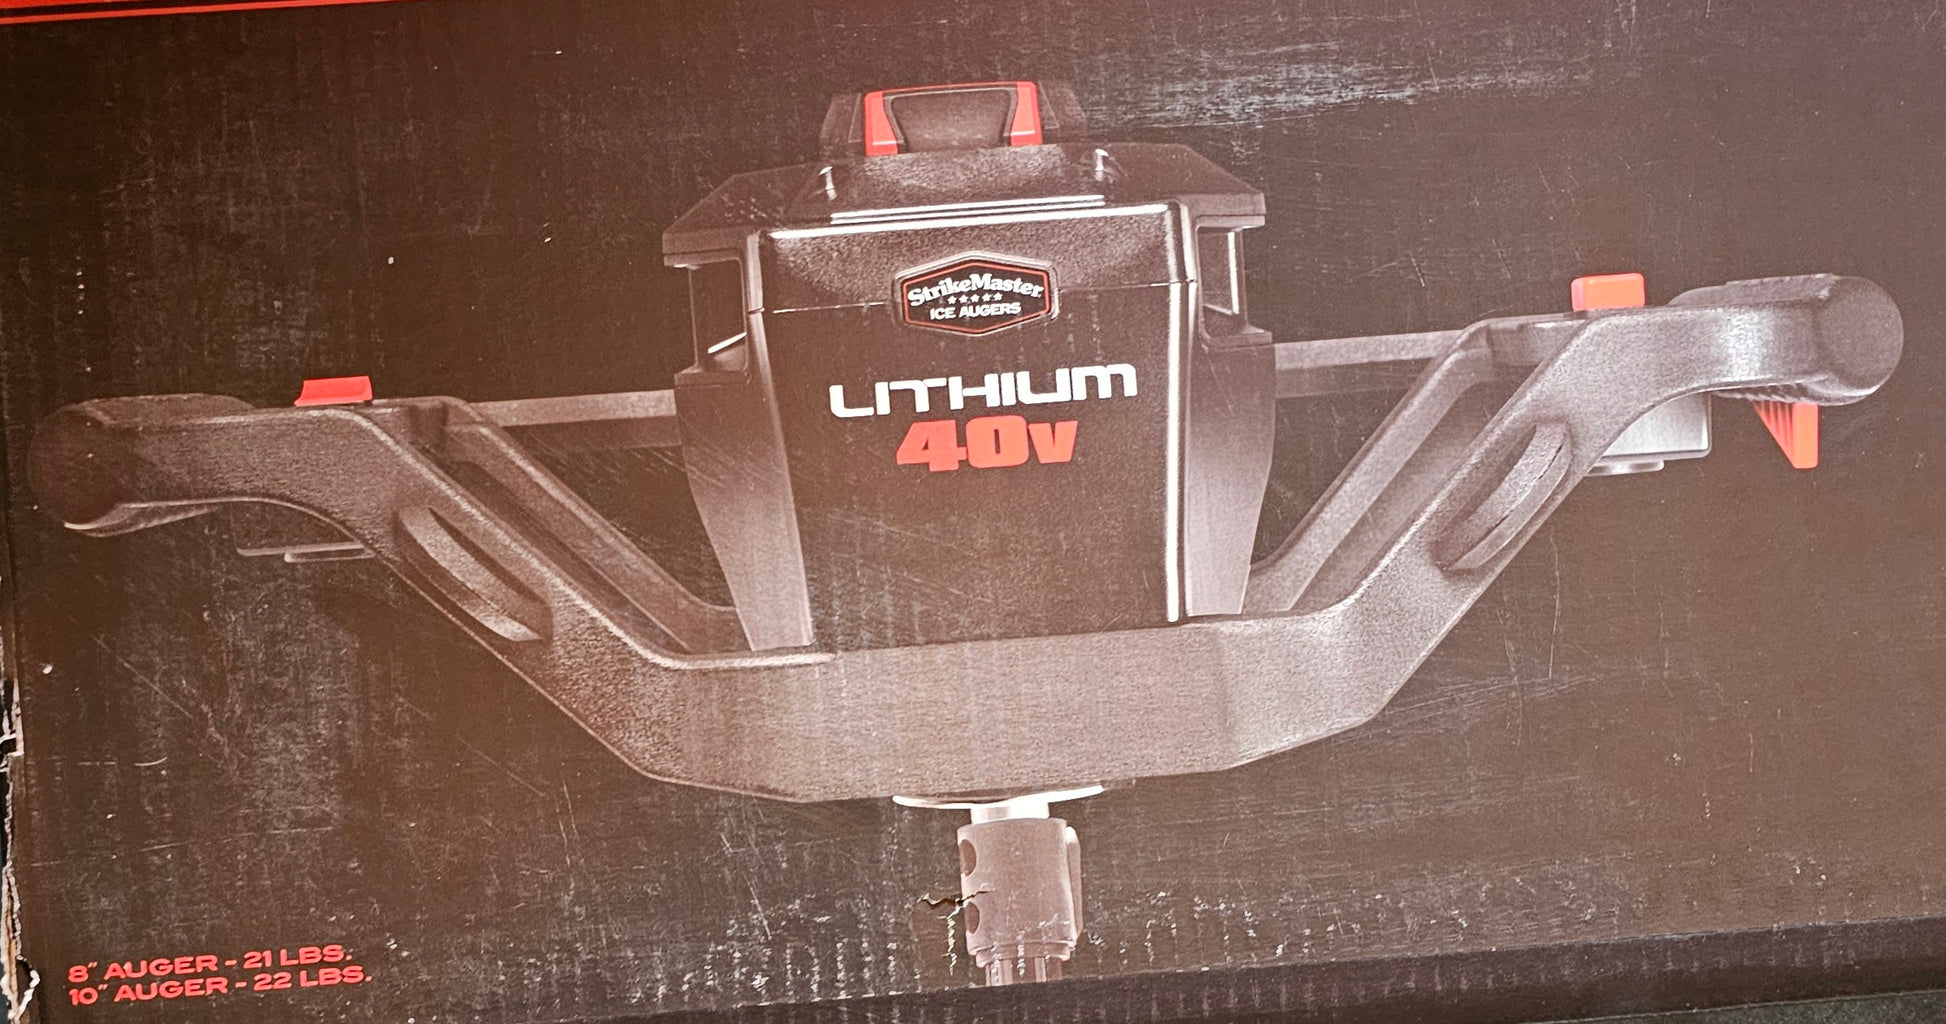 StrikeMaster 40V LITE Lithium 8 Ice Auger